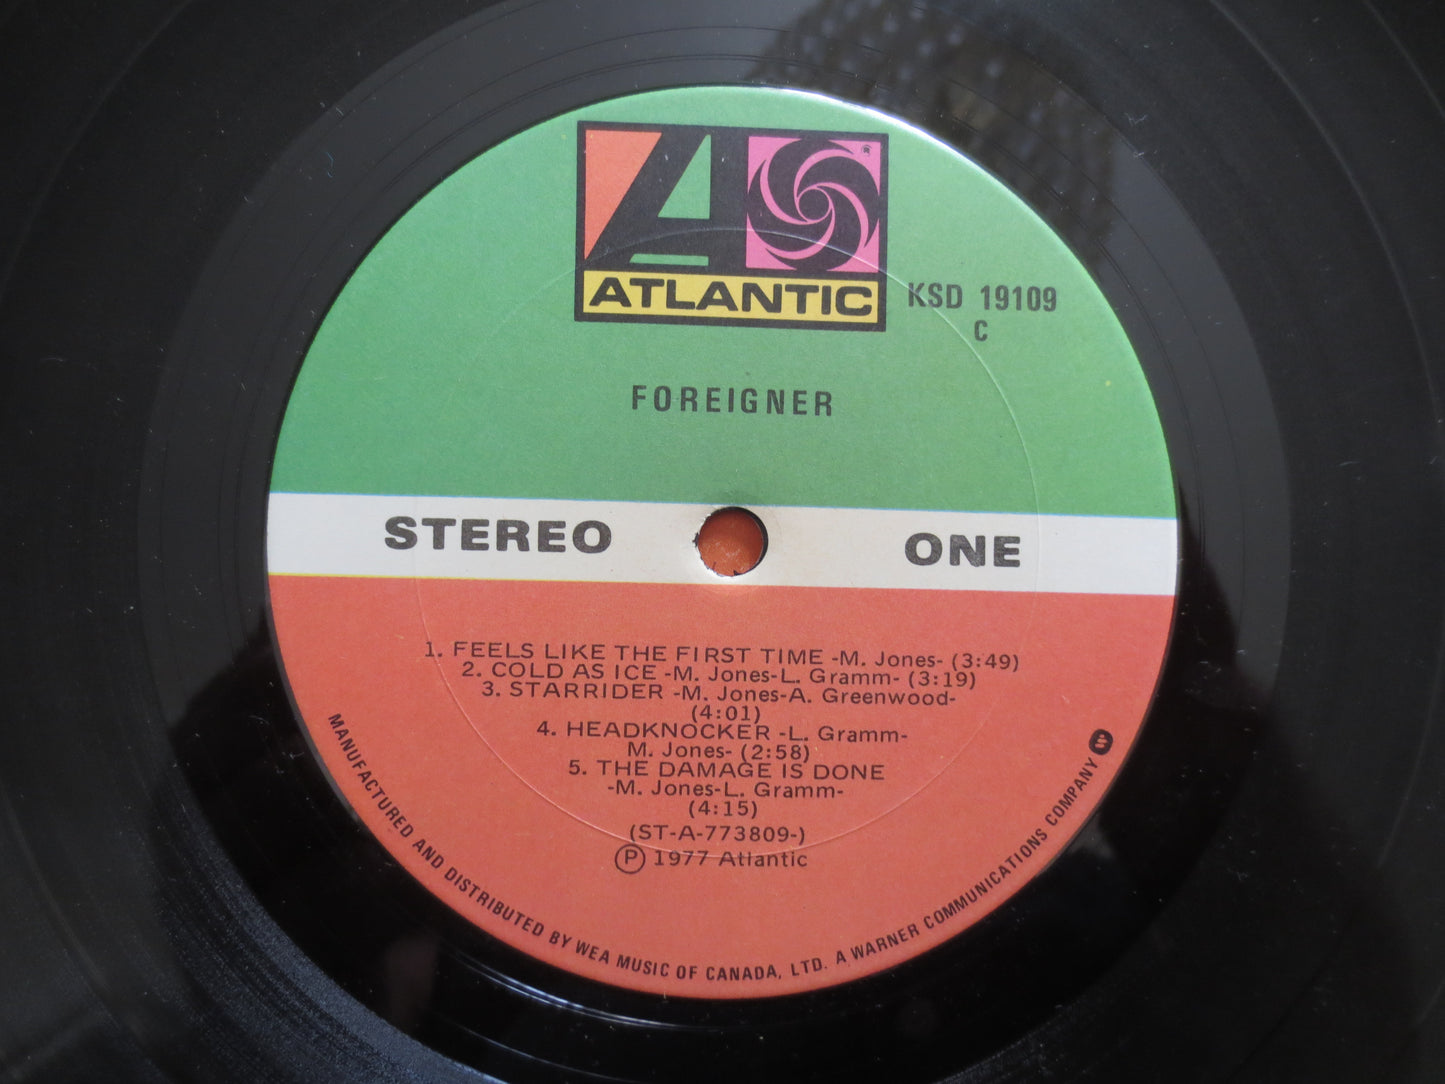 FOREIGNER, FOREIGNER Record, FOREIGNER Album, Foreigner Vinyl, Foreigner Lp, Rock Record, Rock Album, Vinyl Lp, 1977 Record